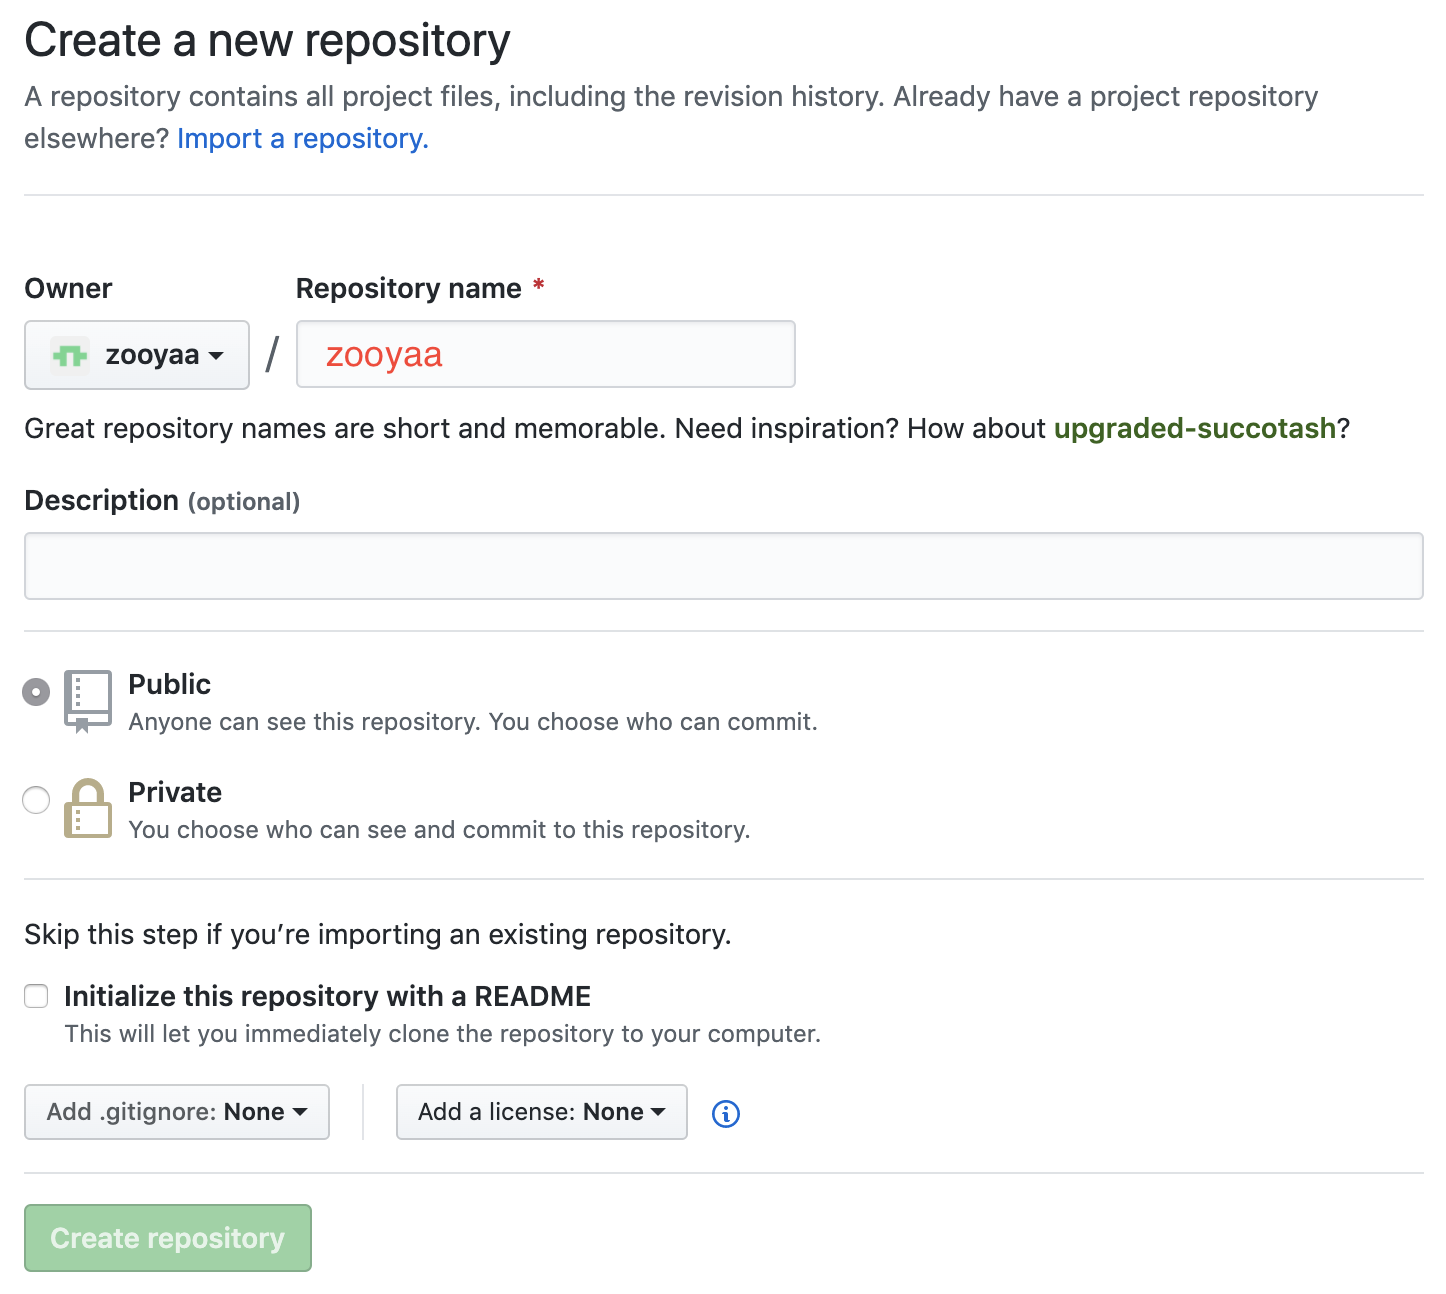 github-create-repository